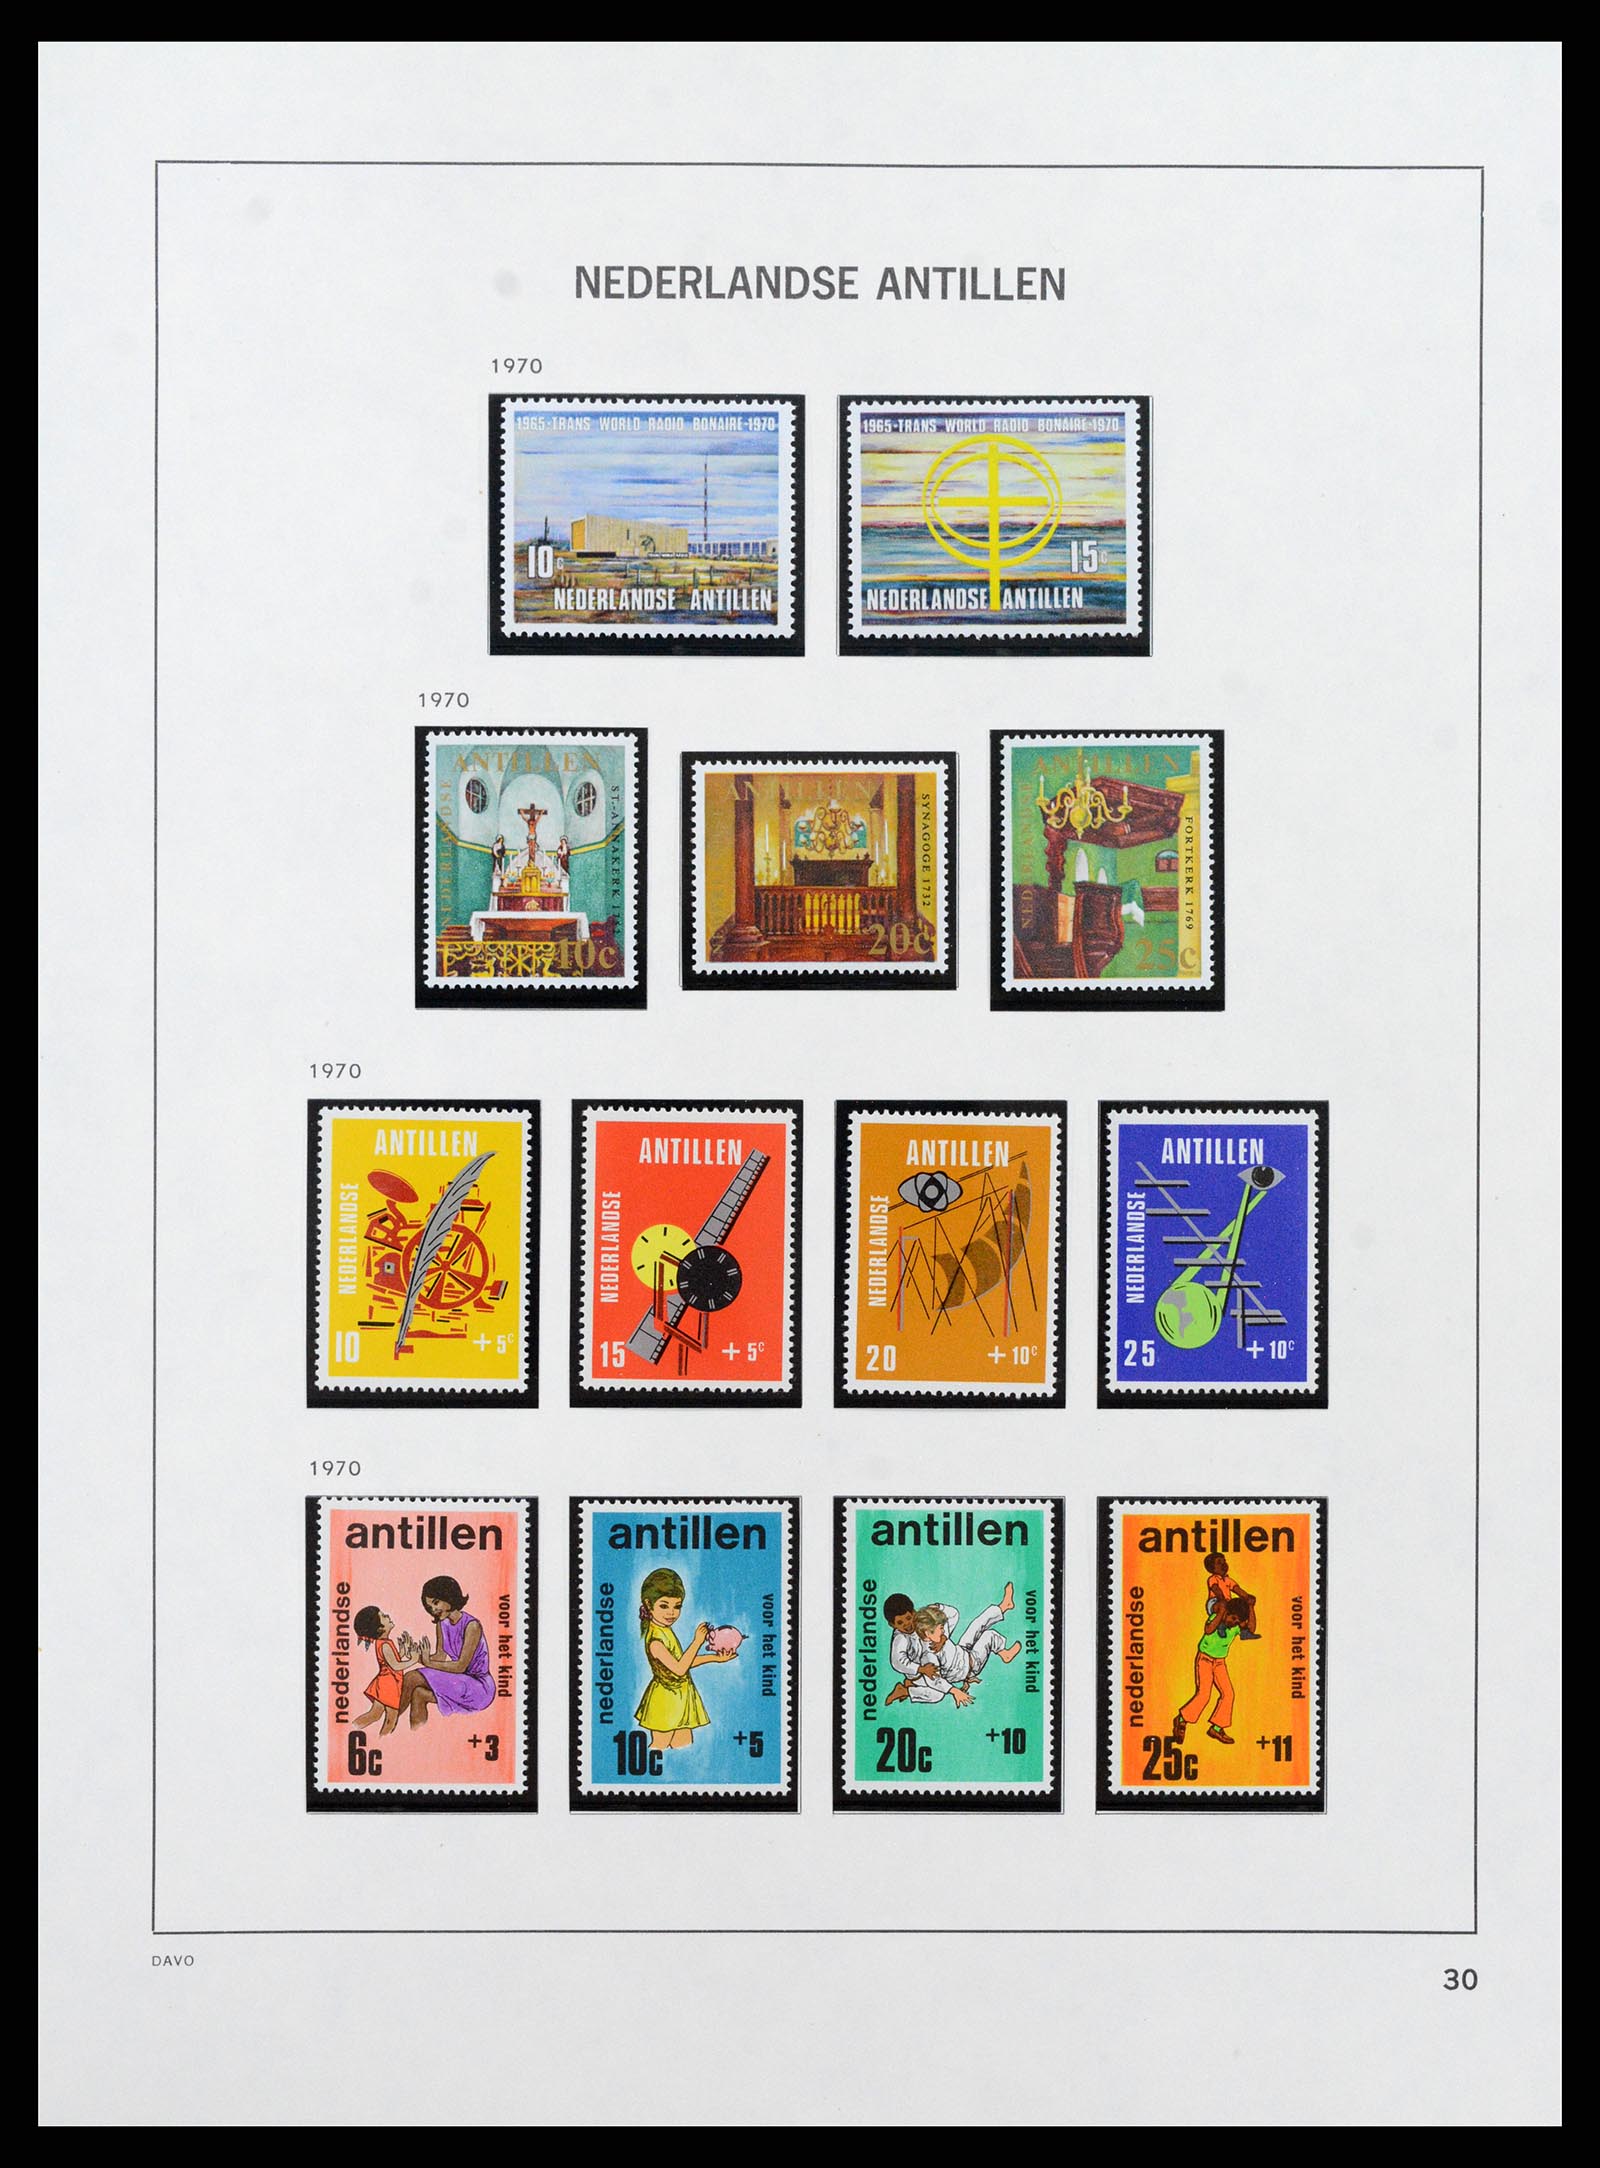 37682 025 - Stamp collection 37682 Netherlands Antilles.